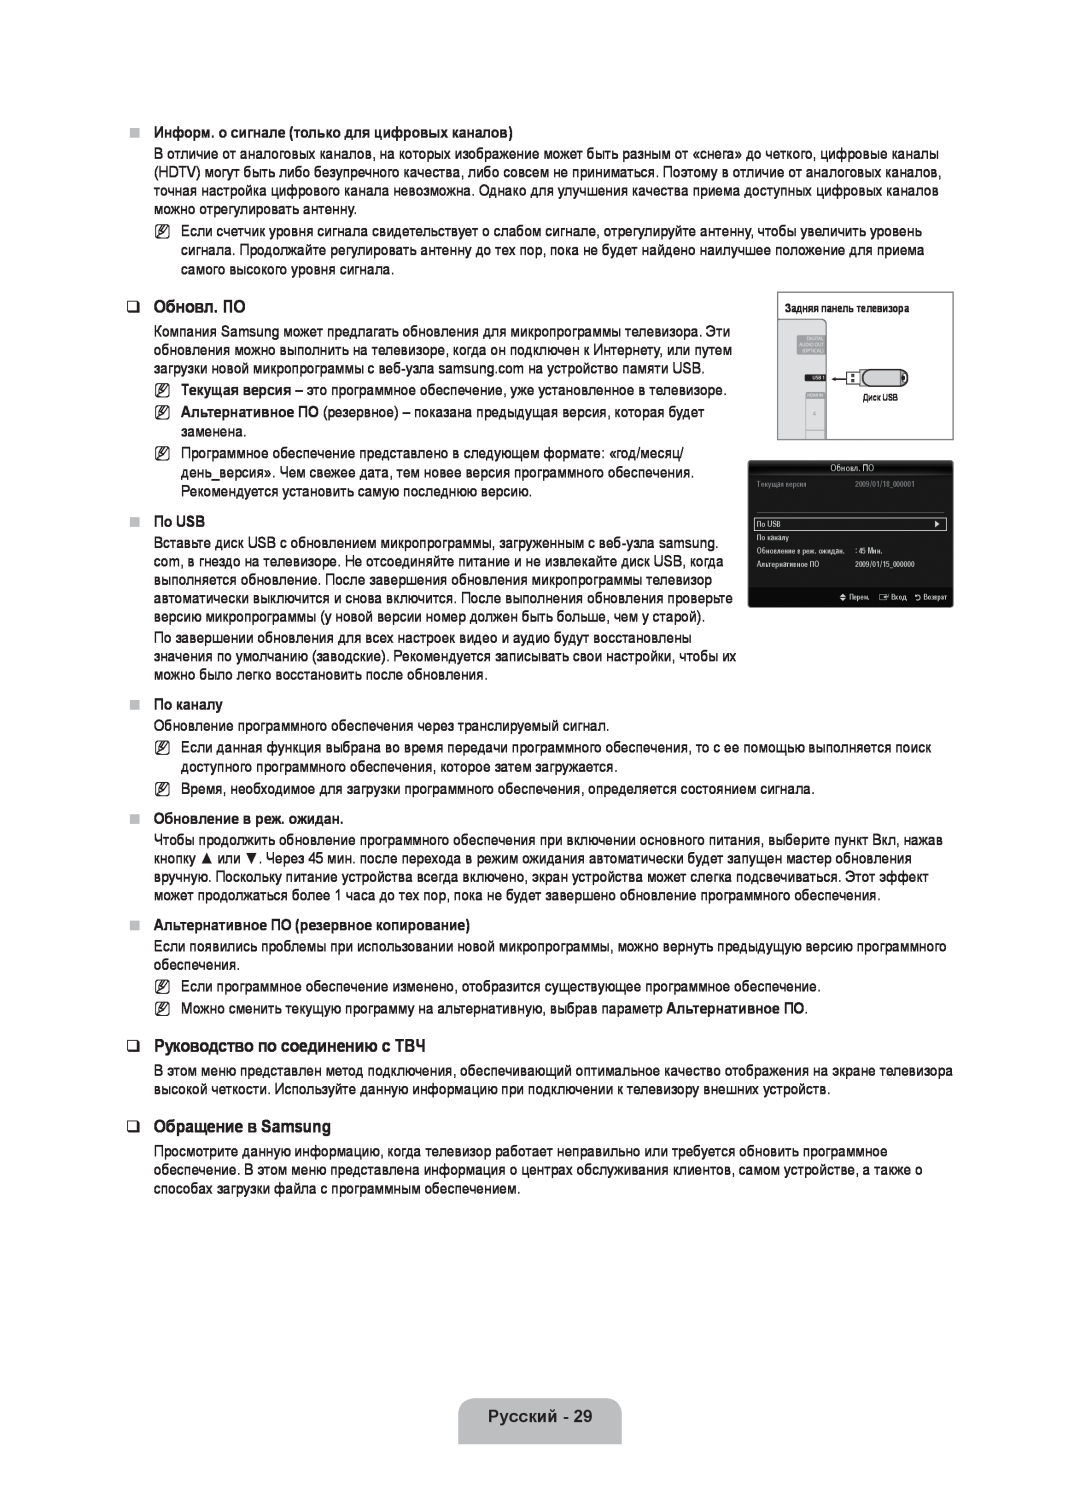 Samsung UE46B6000VWXUA manual Обновл. ПО, Руководство по соединению c ТВЧ, Обращение в Samsung, По USB, По каналу, Русский 